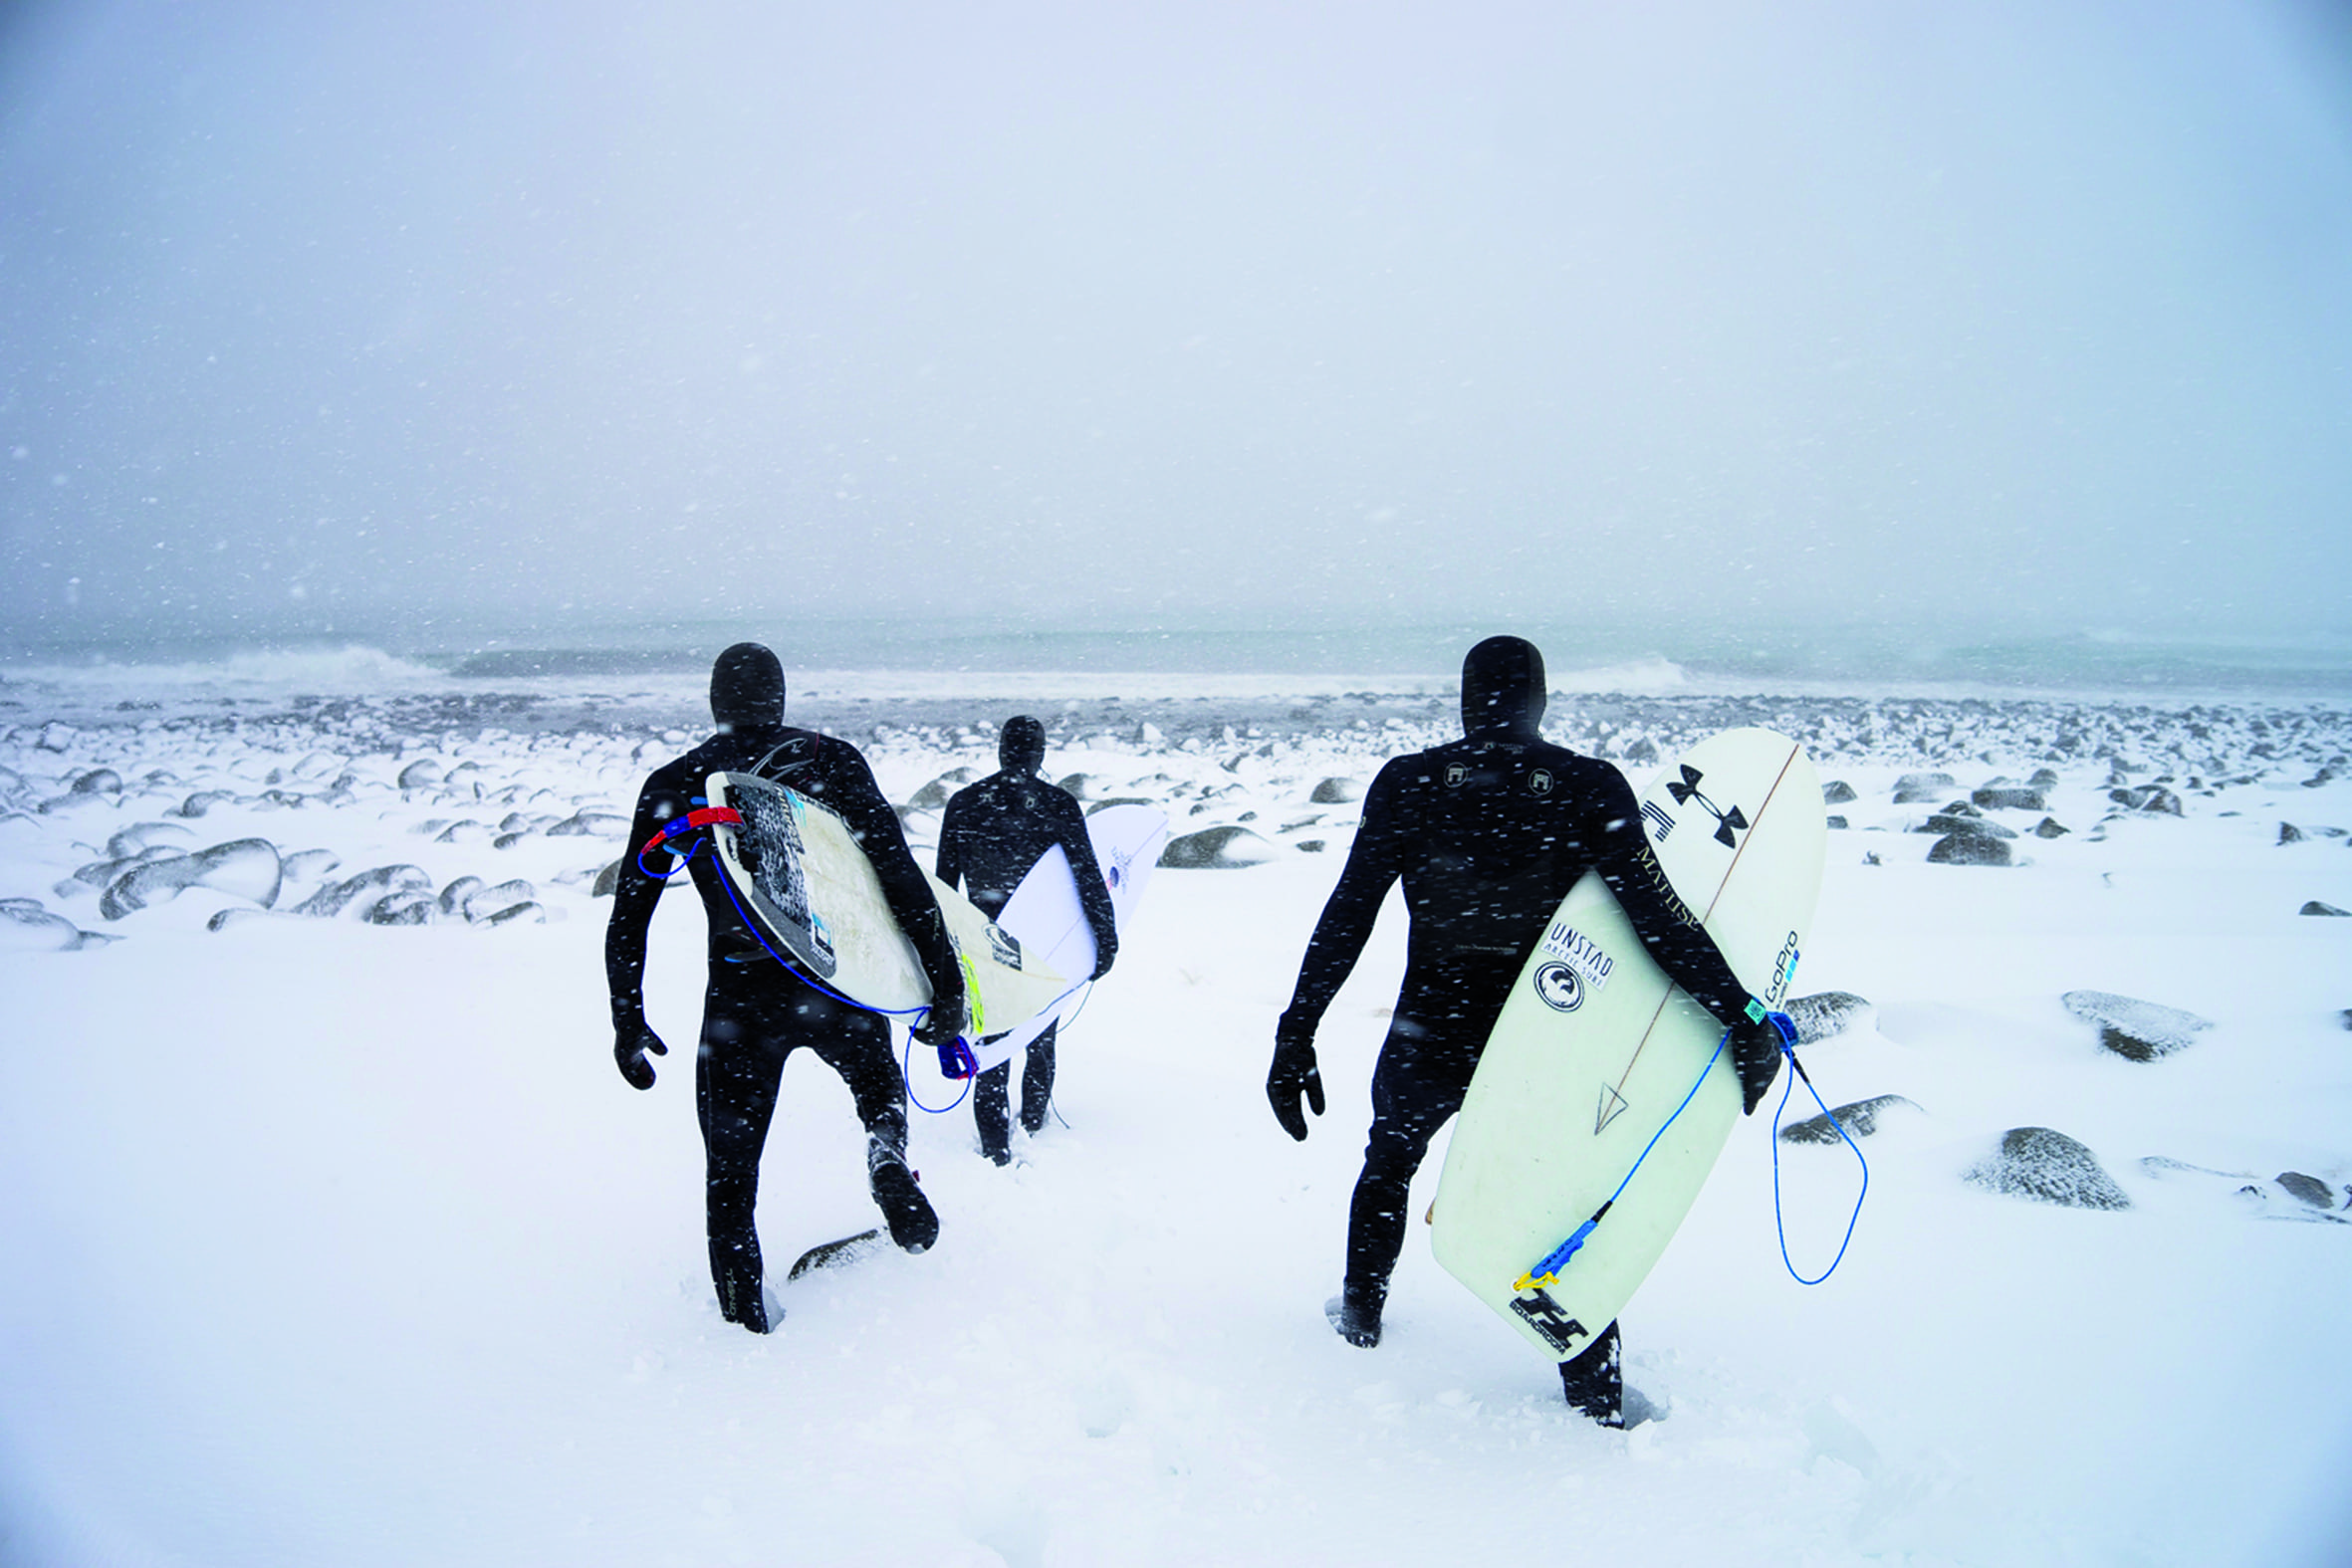 Norway, Winter, Surfing / © Chris Burkard, 2014